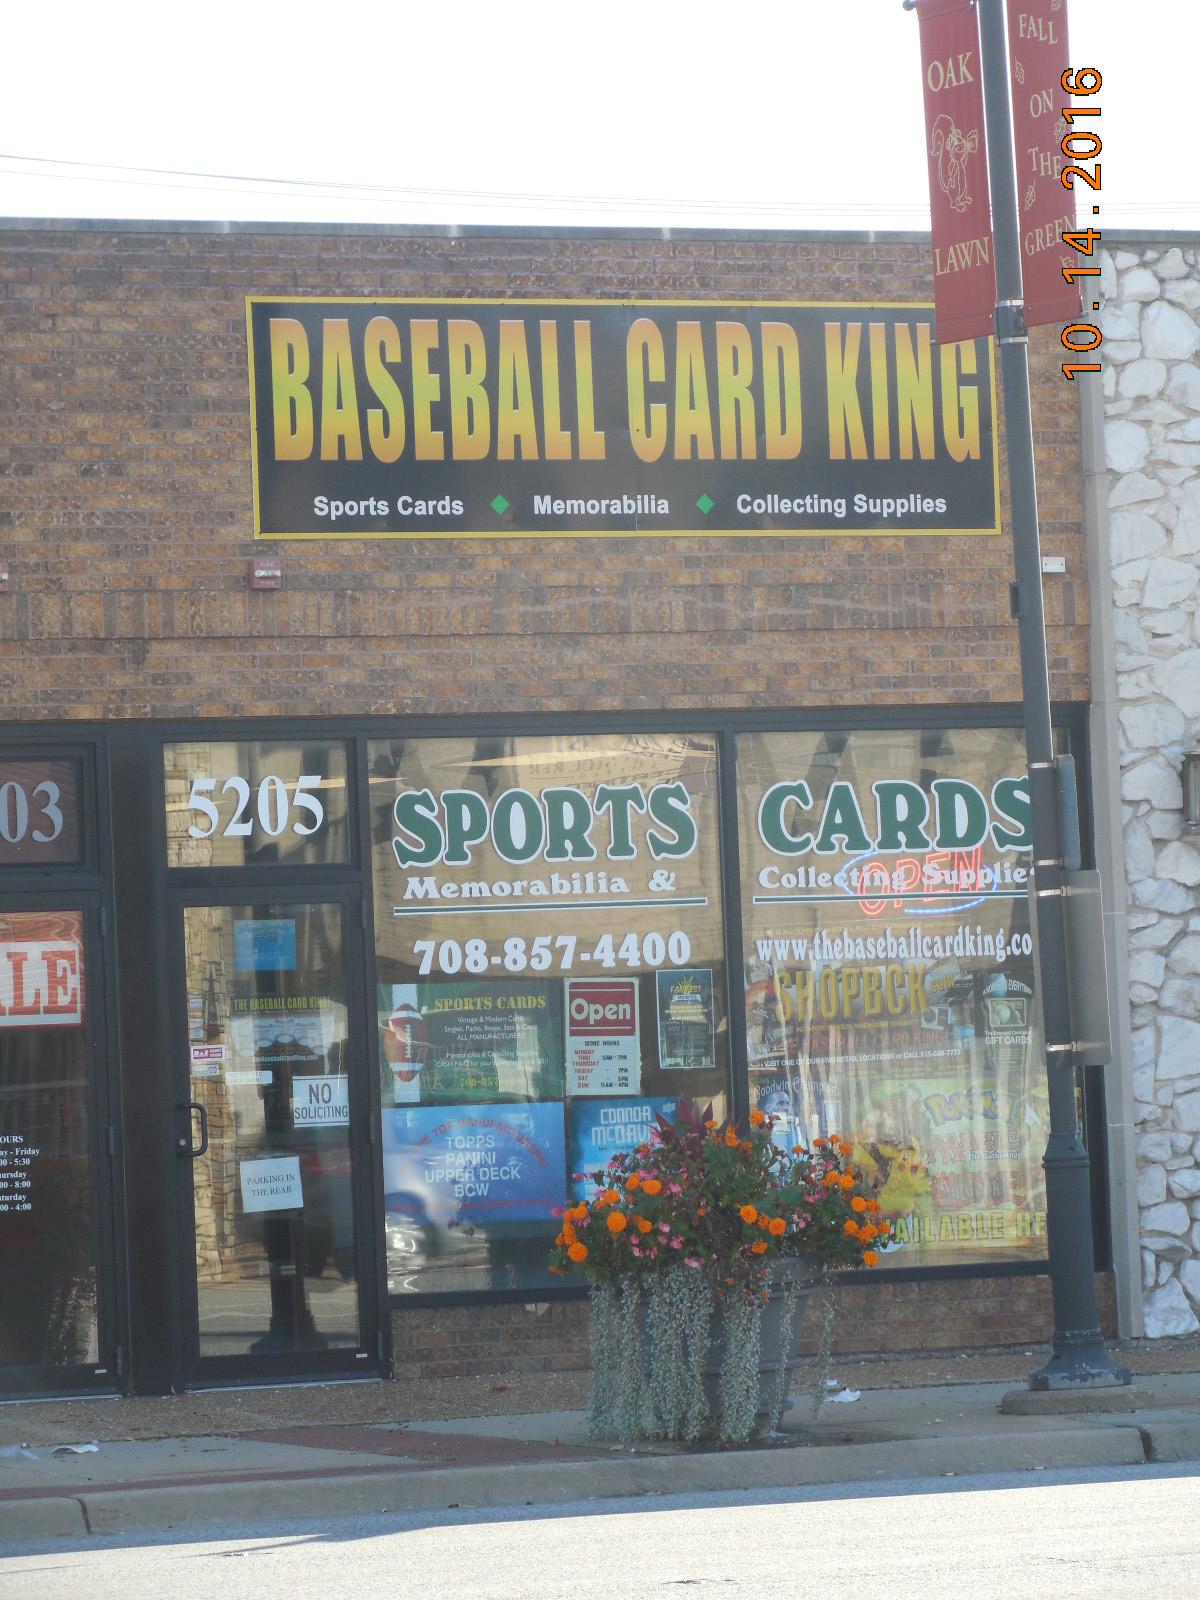 The Baseball Card King